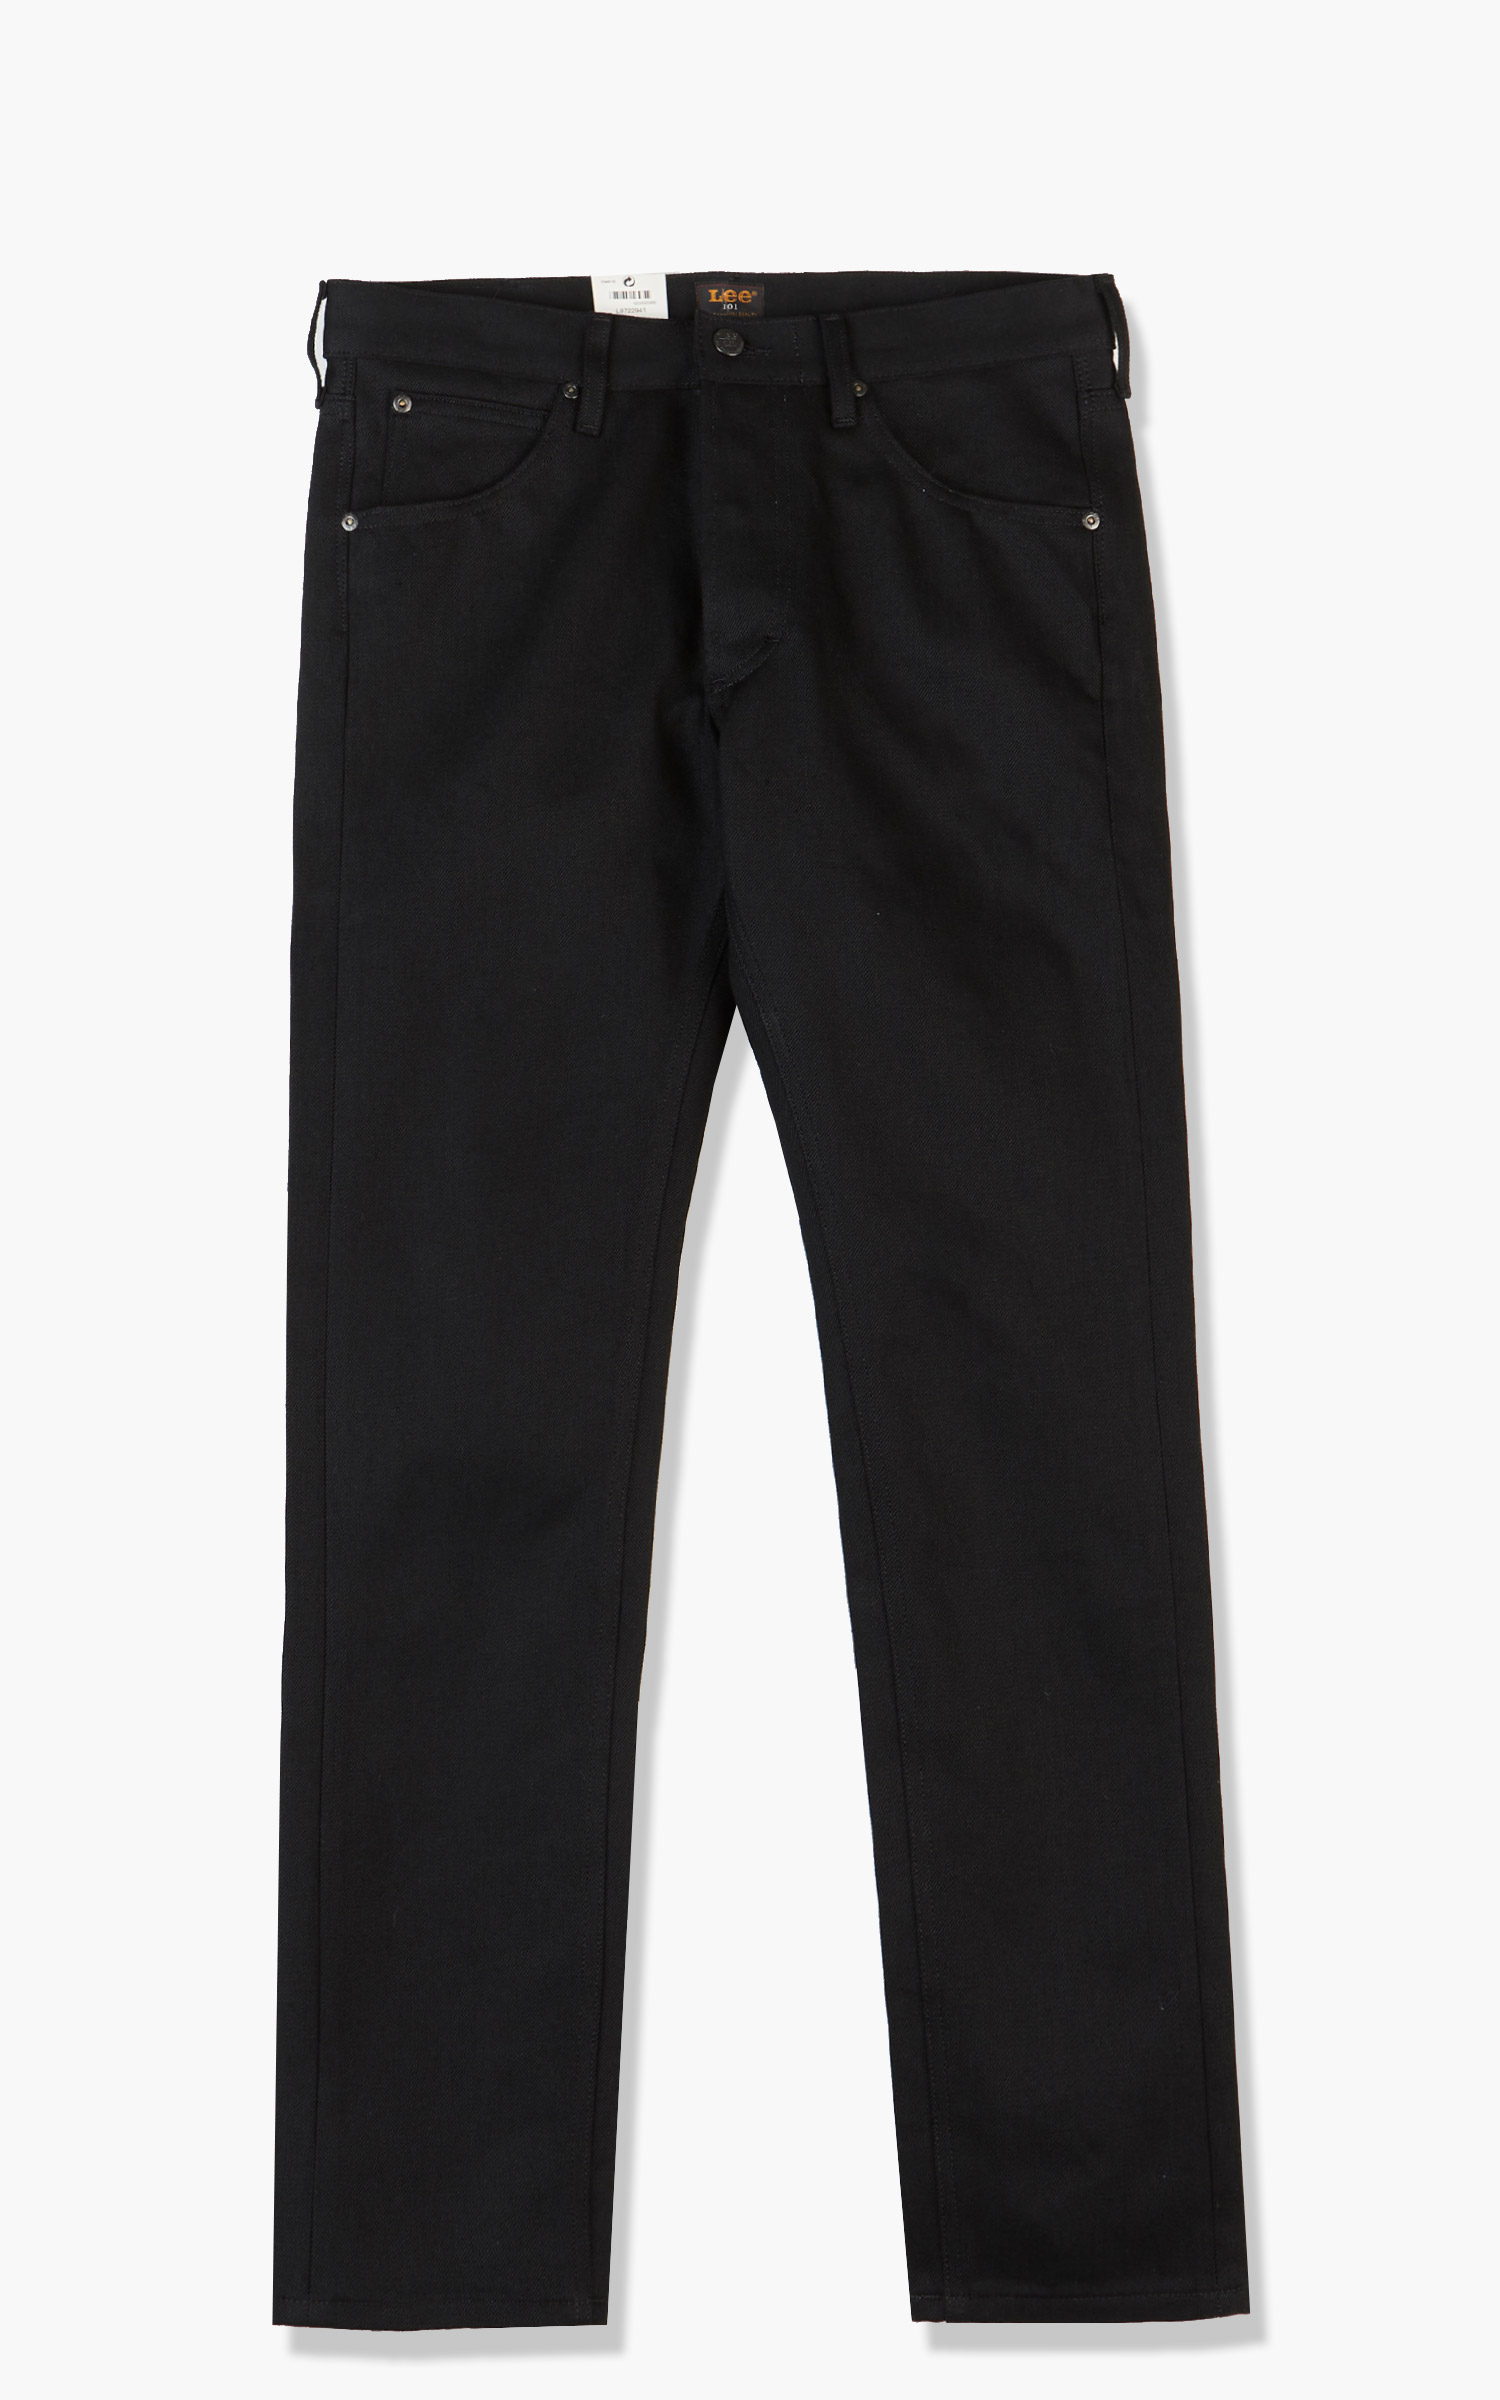 Lee 101 101 S Jeans Dry Selvedge Black 13.75oz | Cultizm